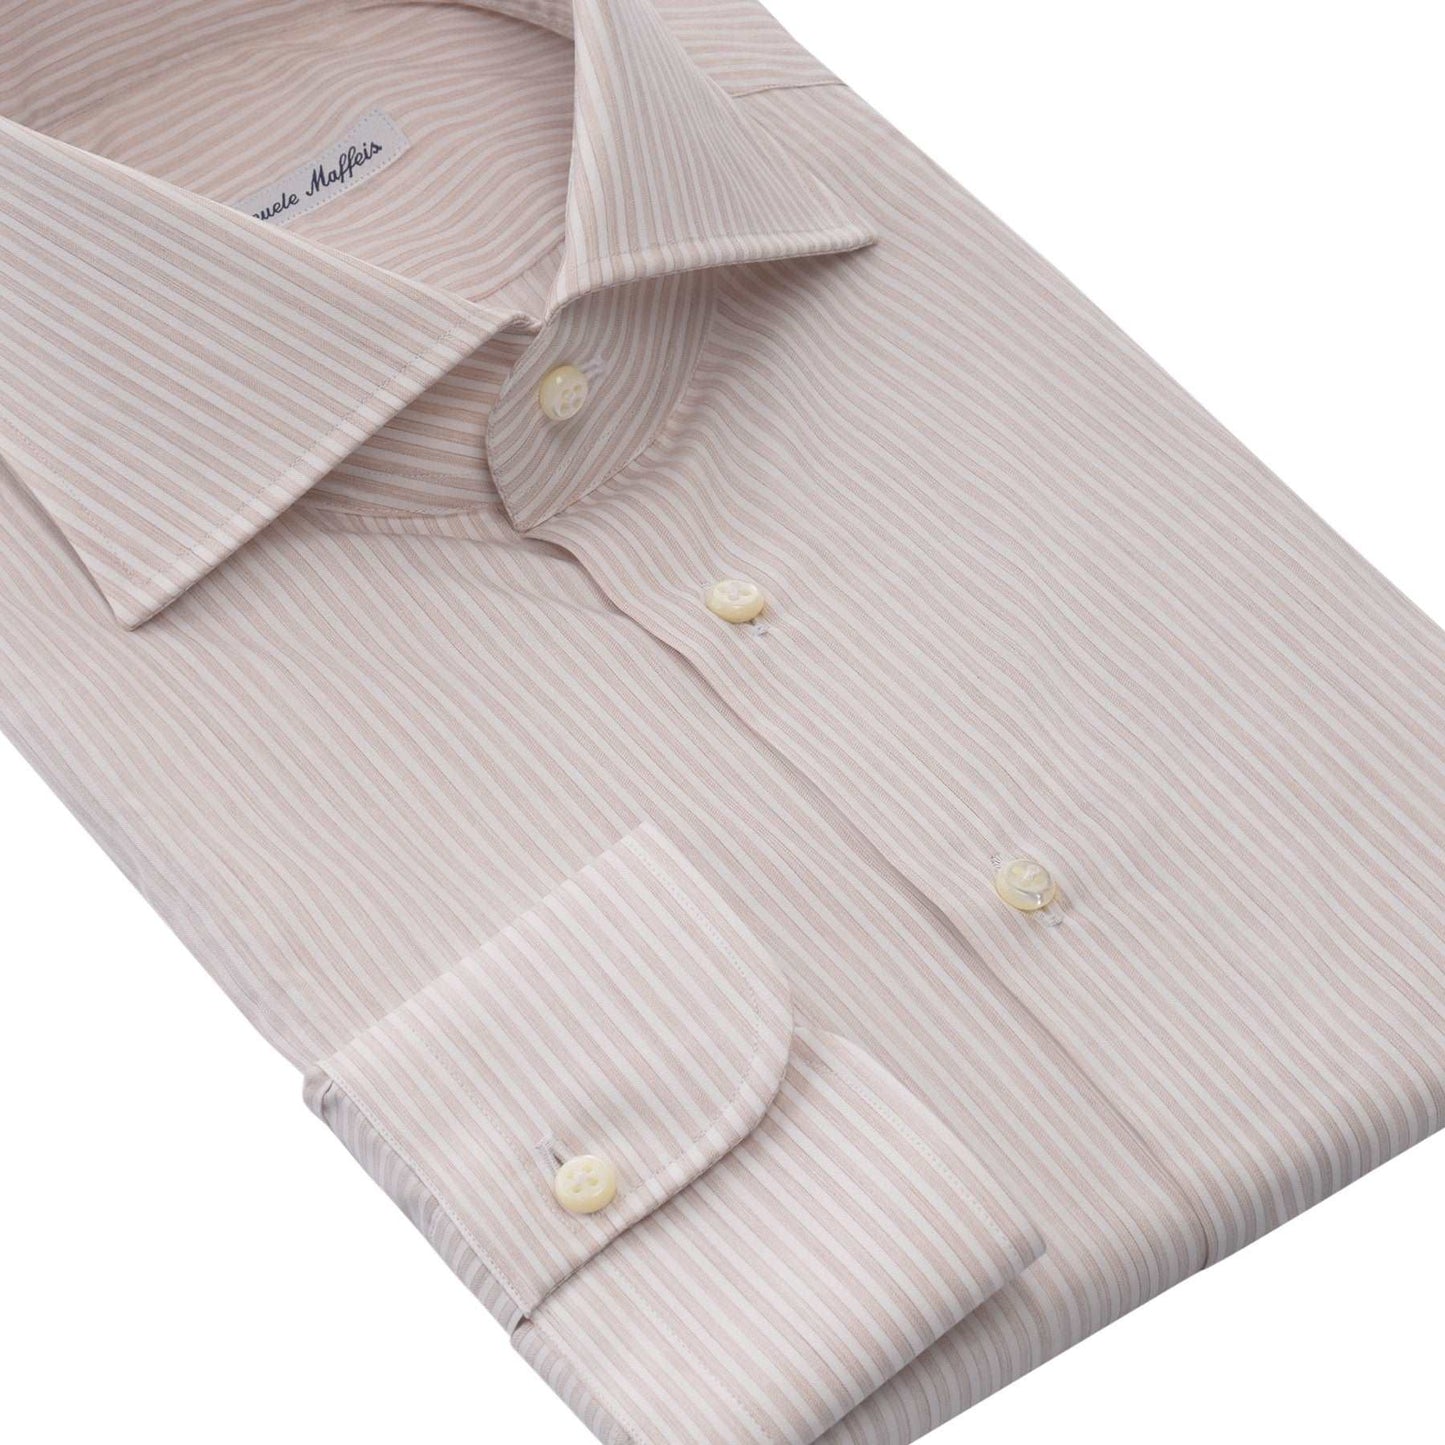 Emanuele Maffeis Bengal-Stripe Cotton Beige Shirt with Cutaway Collar - SARTALE